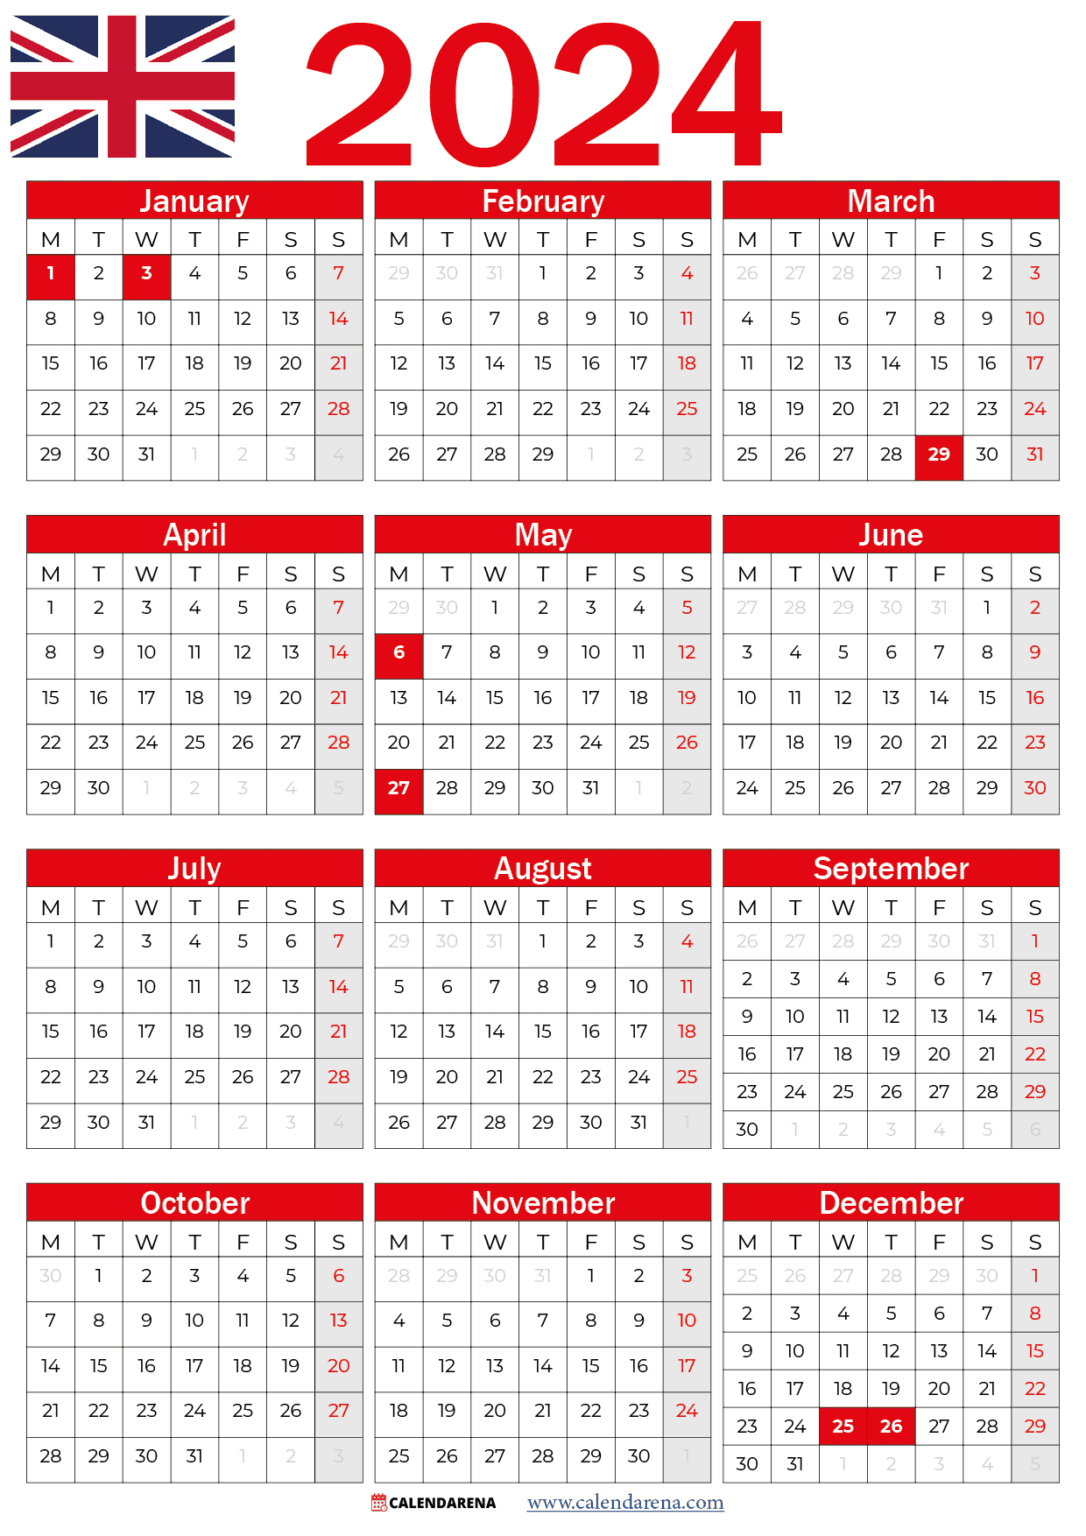 2024 Calendar Uk With Bank Holidays Printable Jan 2024 Calendar - Free Printable 2024 Calendar With UK Holidays